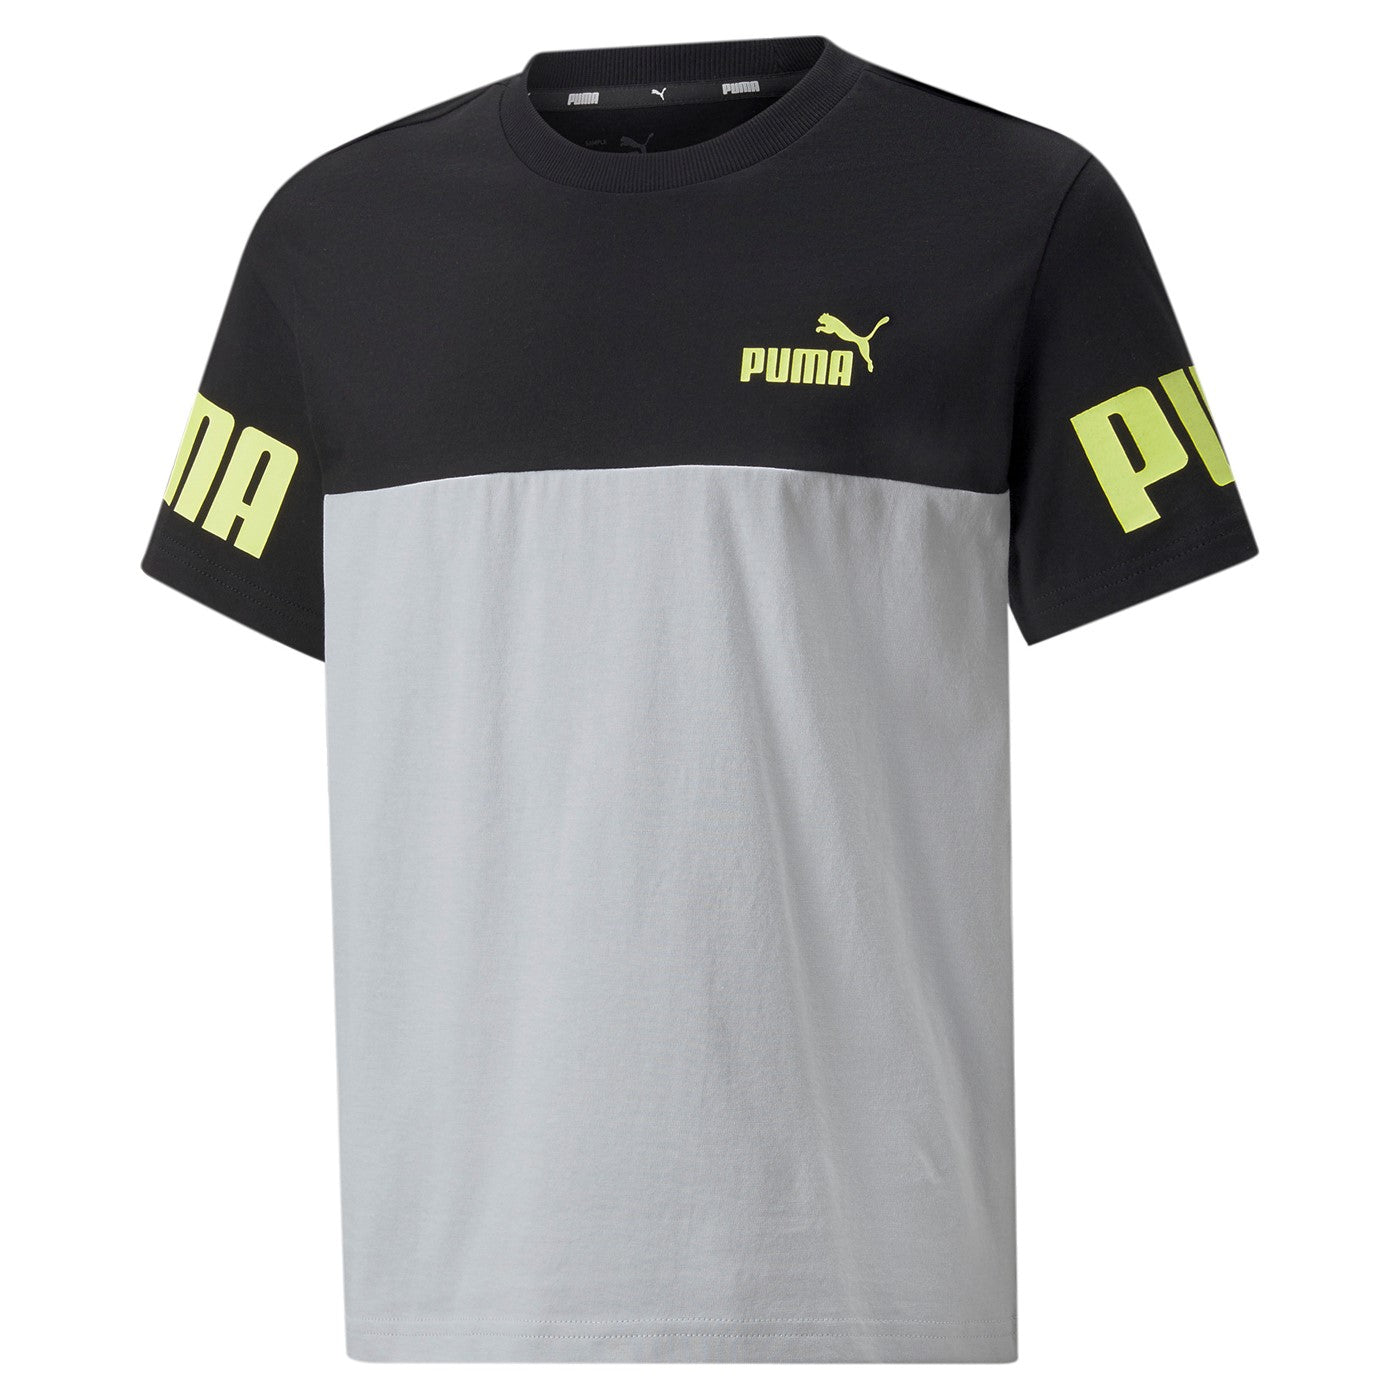 Puma T-shirt Power 847305 19 harbor mist-black